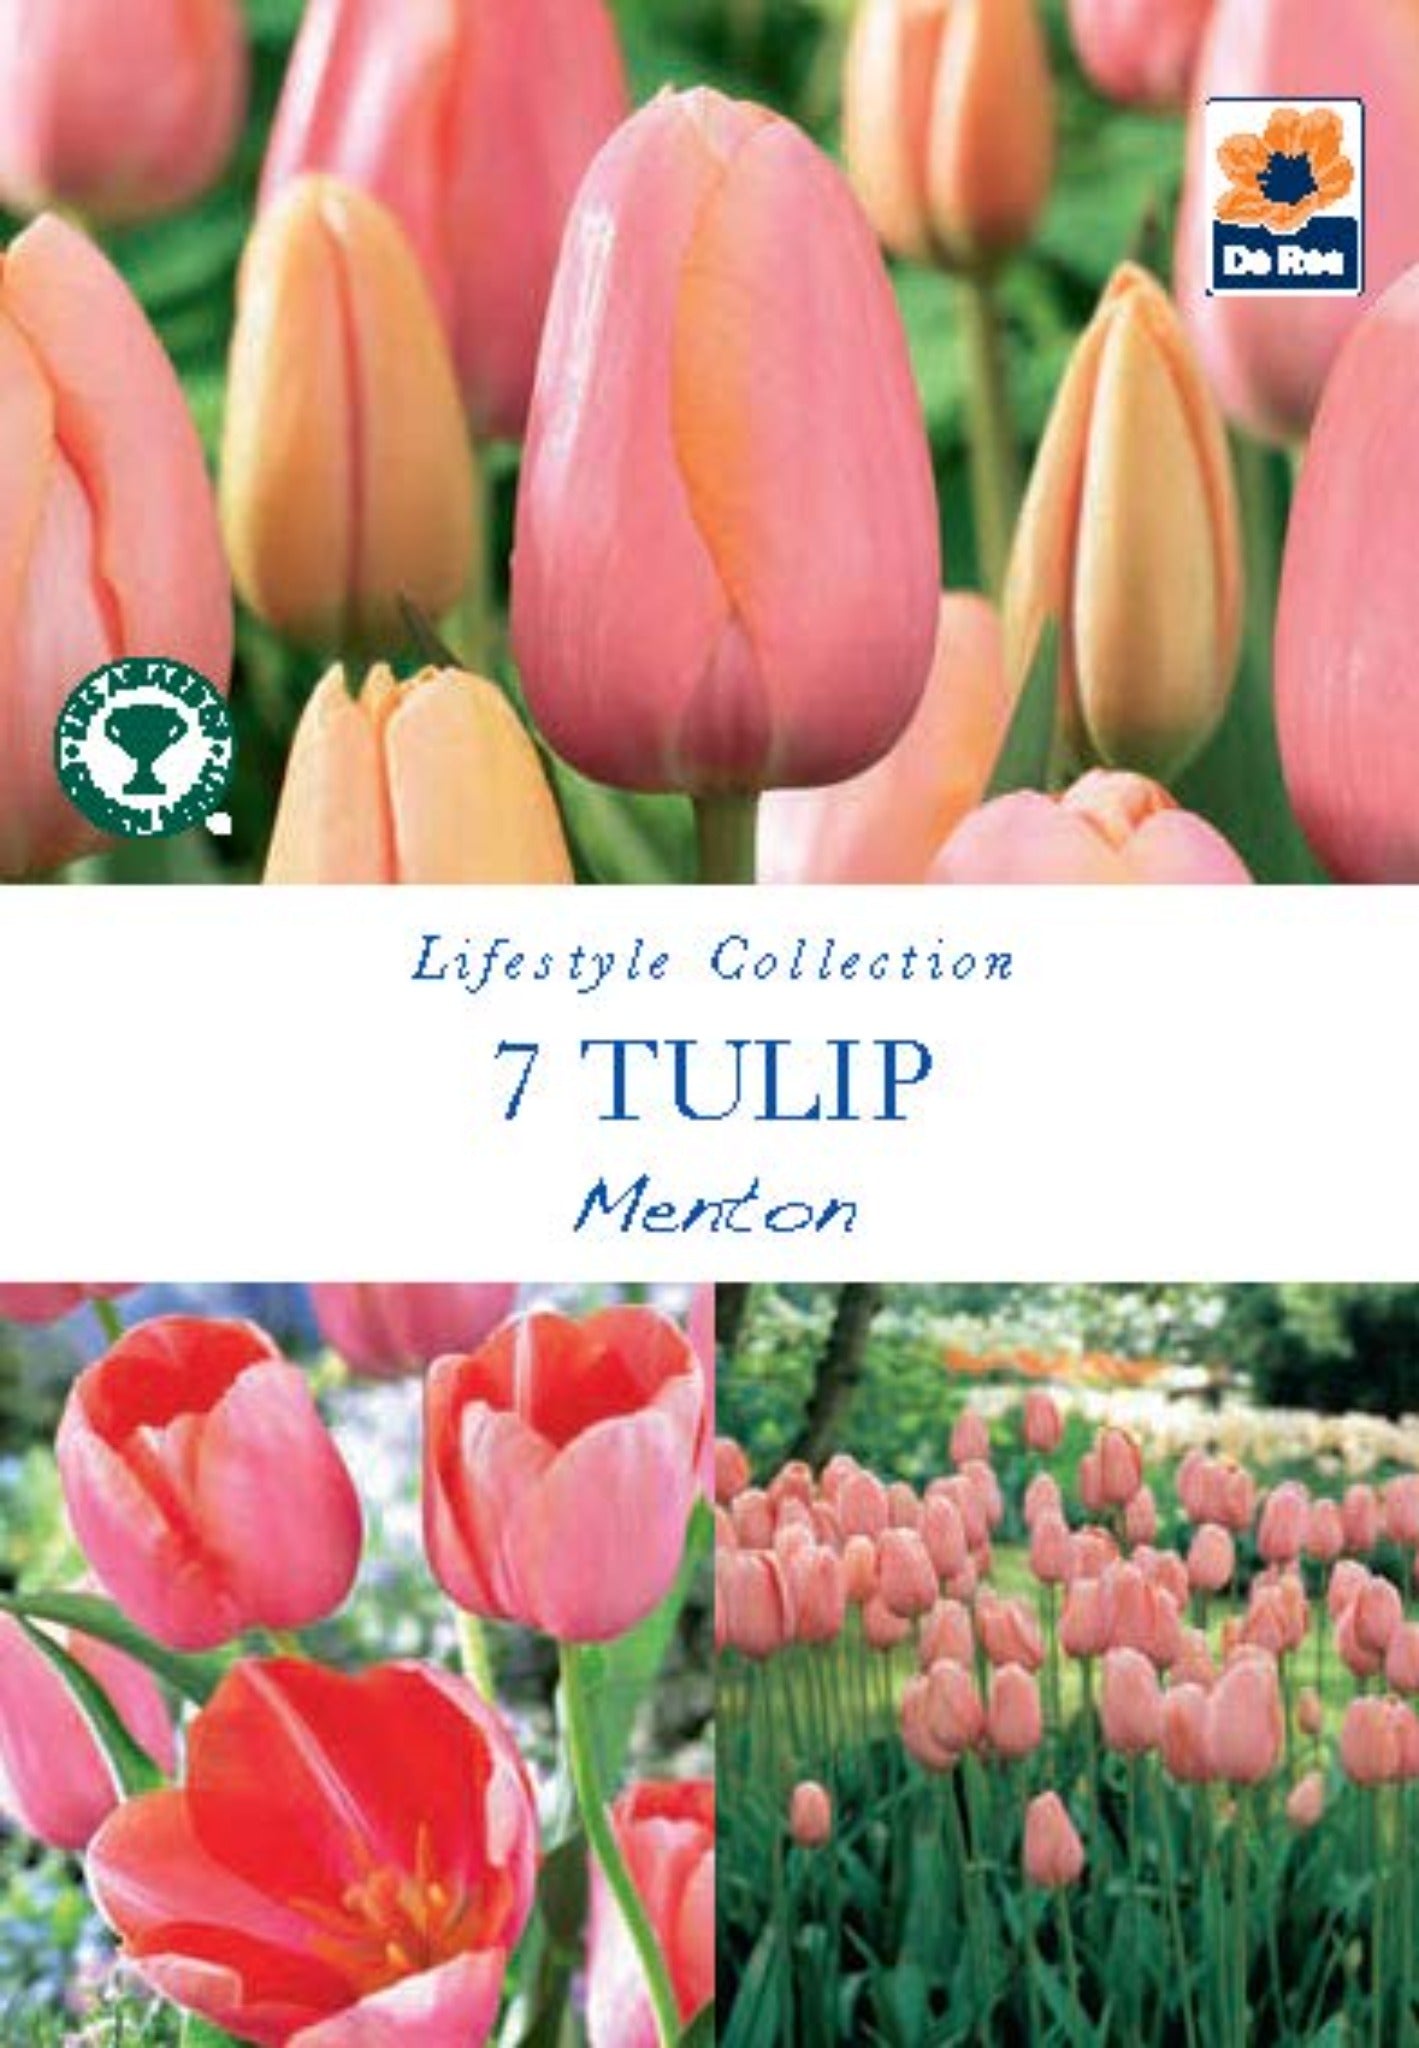 Tulip 'Menton' (7 Bulbs)